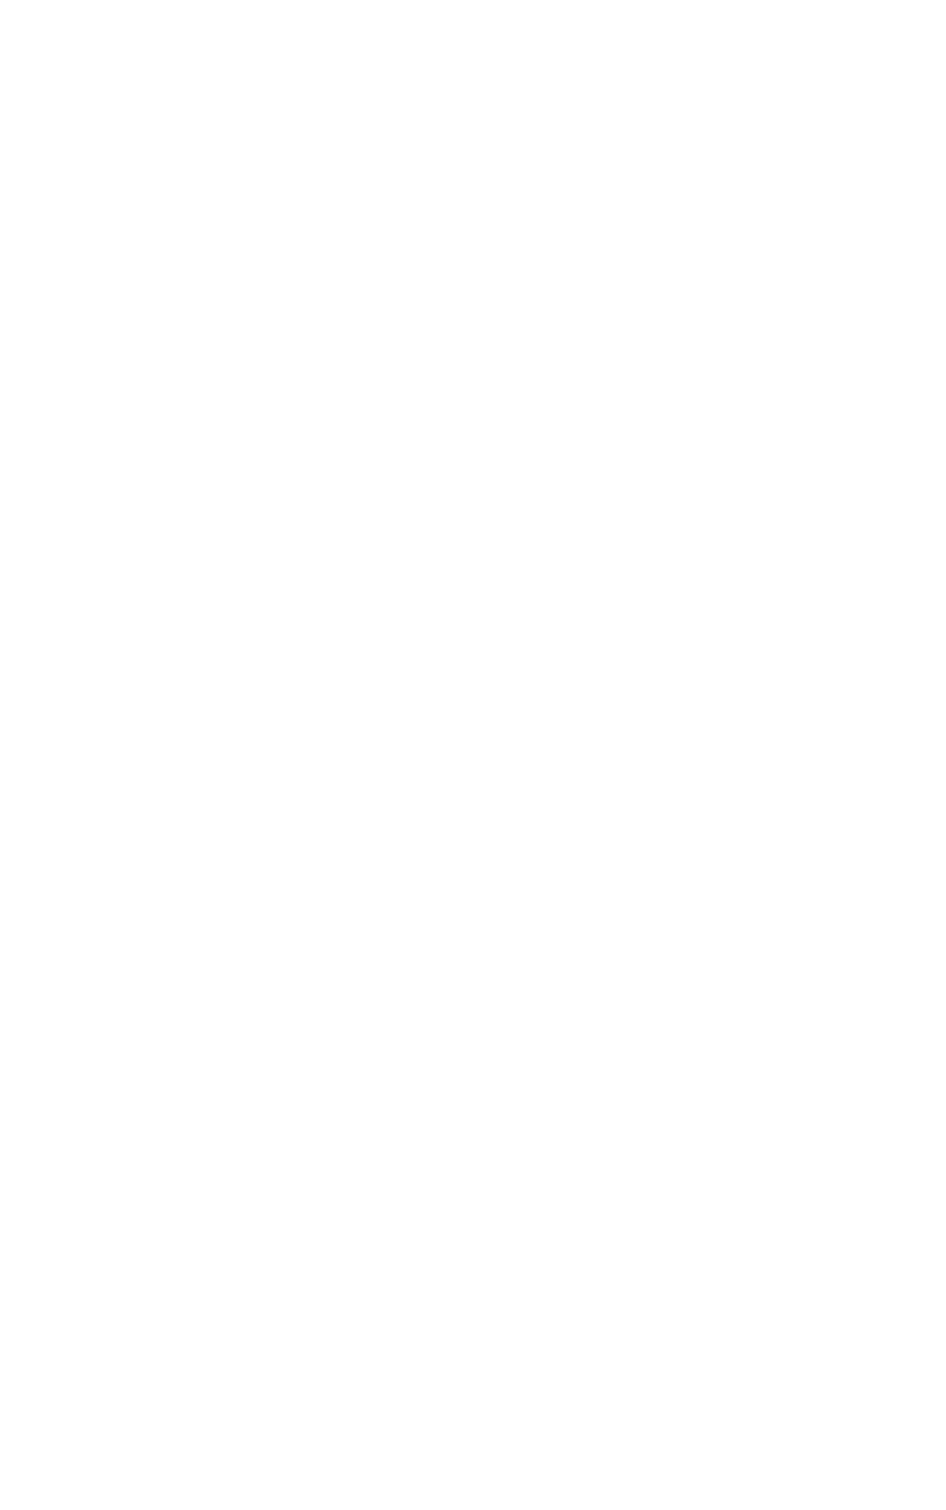 Bitfarms logo for dark backgrounds (transparent PNG)